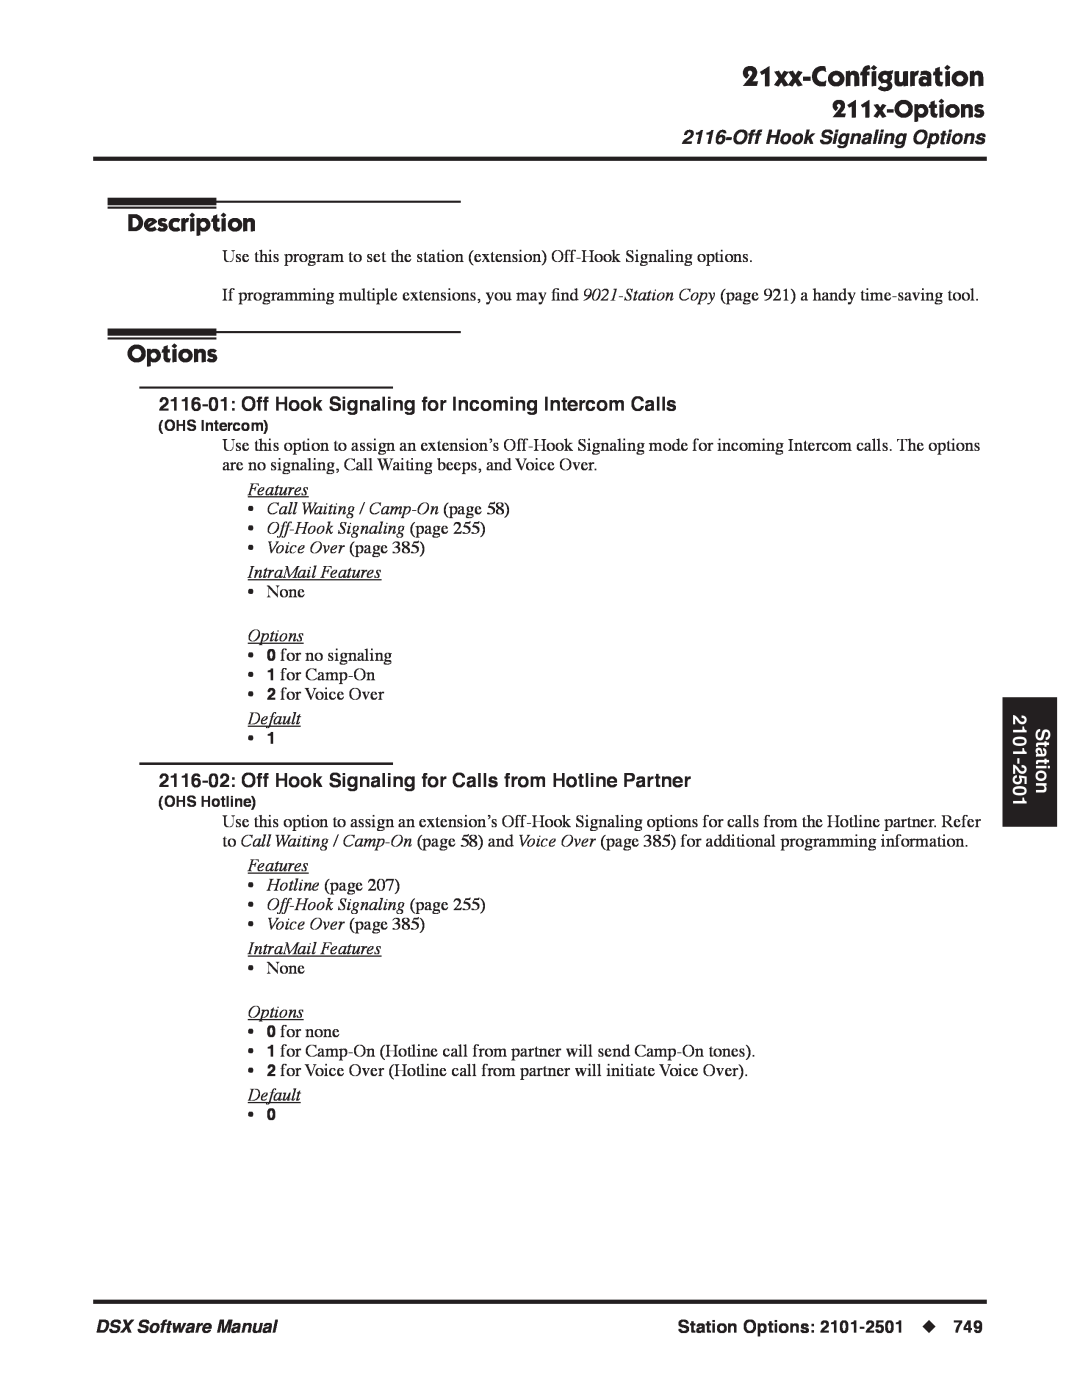 NEC P, N 1093100 software manual 21xx-Conﬁguration, 211x-Options, Description, OffHook Signaling Options, Station 